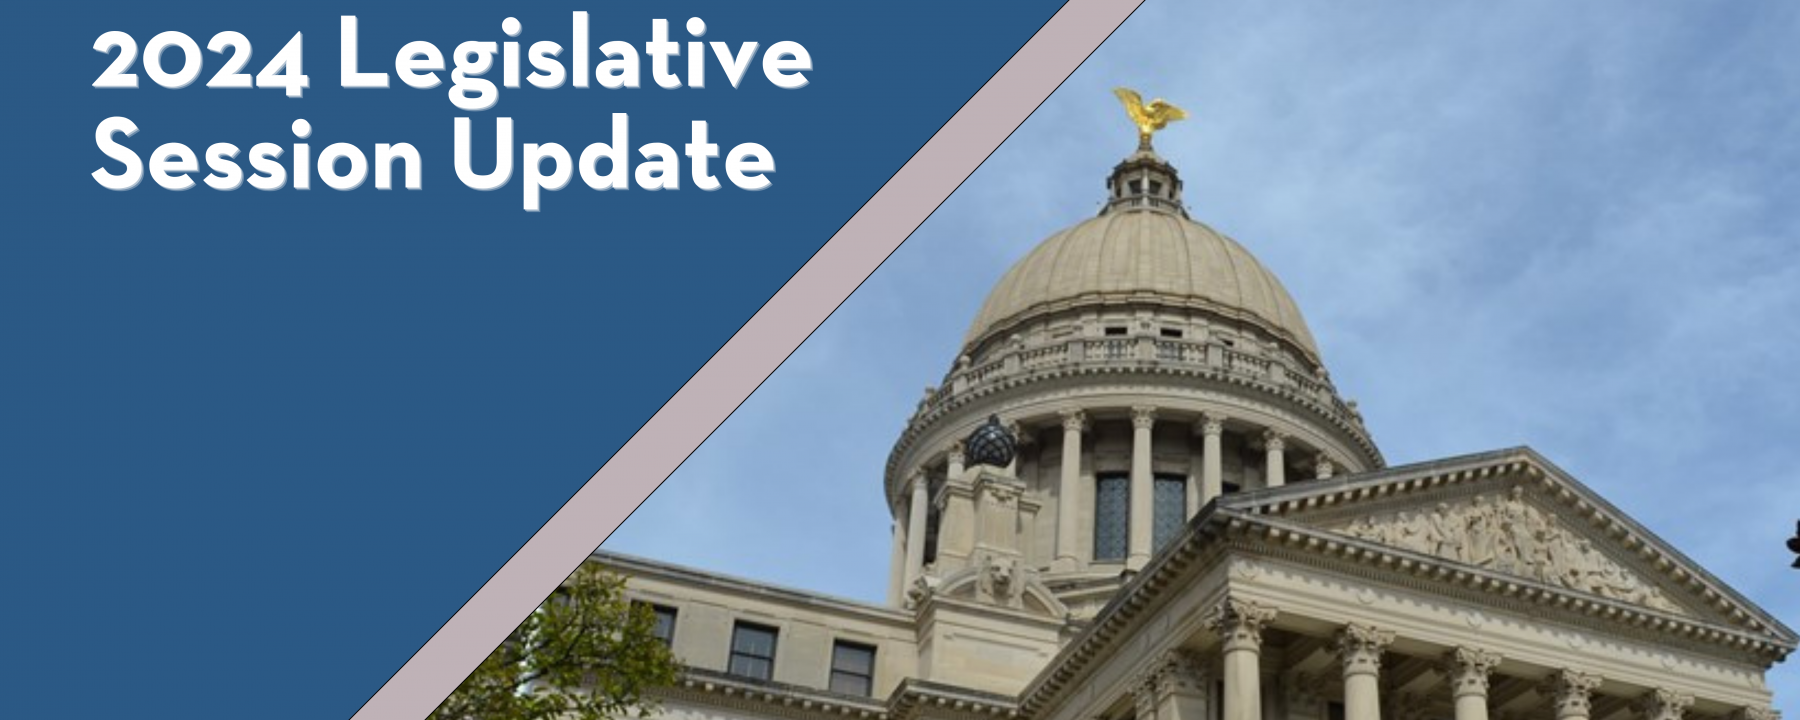 2024 Legislative Session Updates